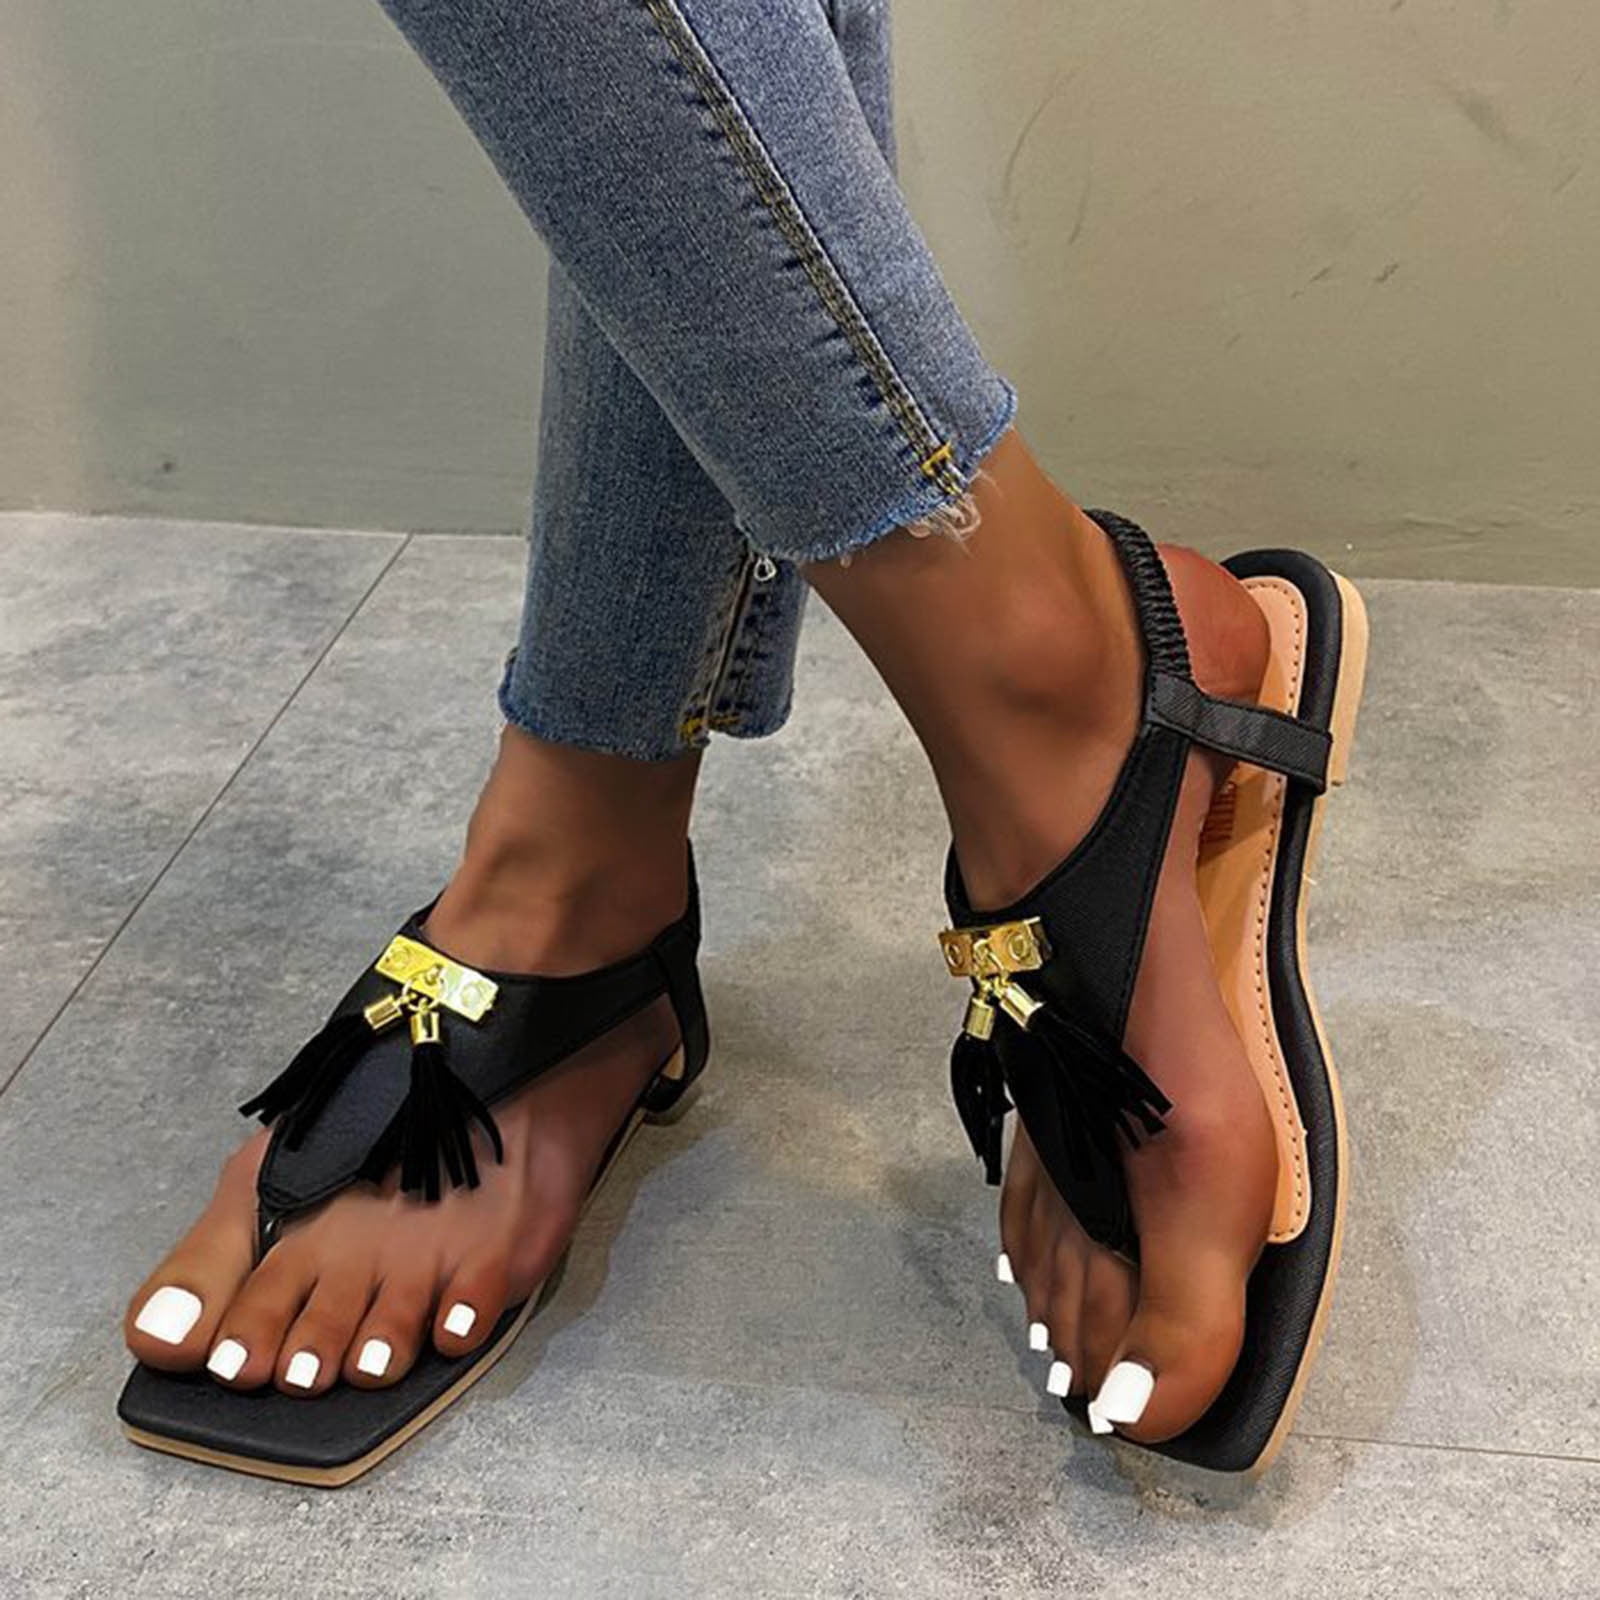 WQJNWEQ Clearance Sandals for Women ladies Summer Sandals Fashion ...